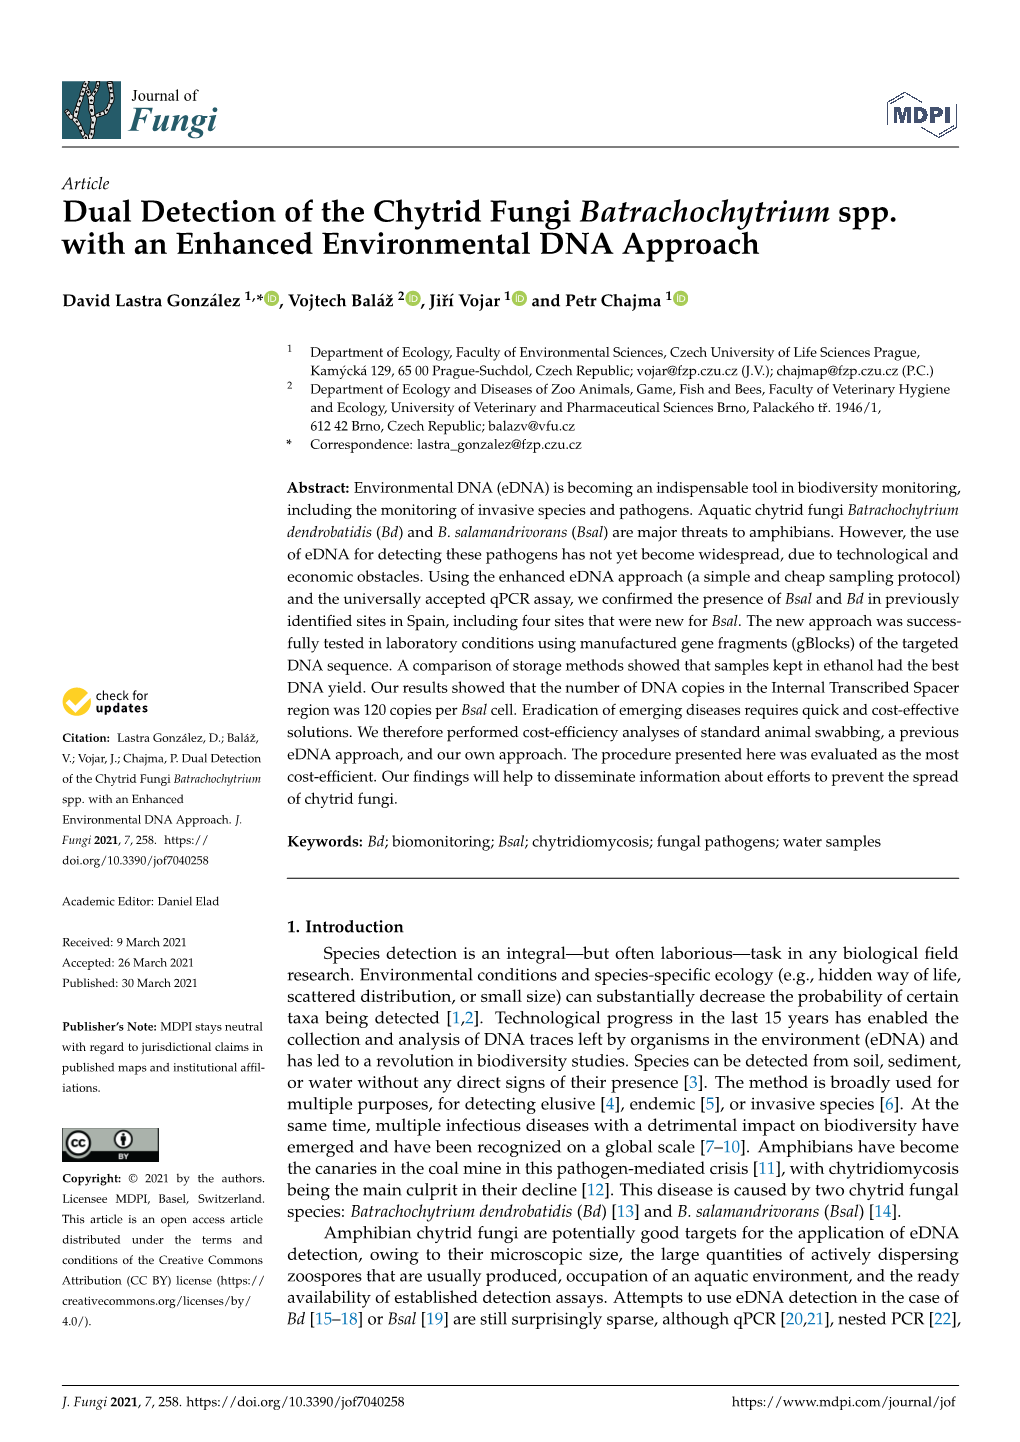 Dual Detection of the Chytrid Fungi Batrachochytrium Spp. with an Enhanced Environmental DNA Approach